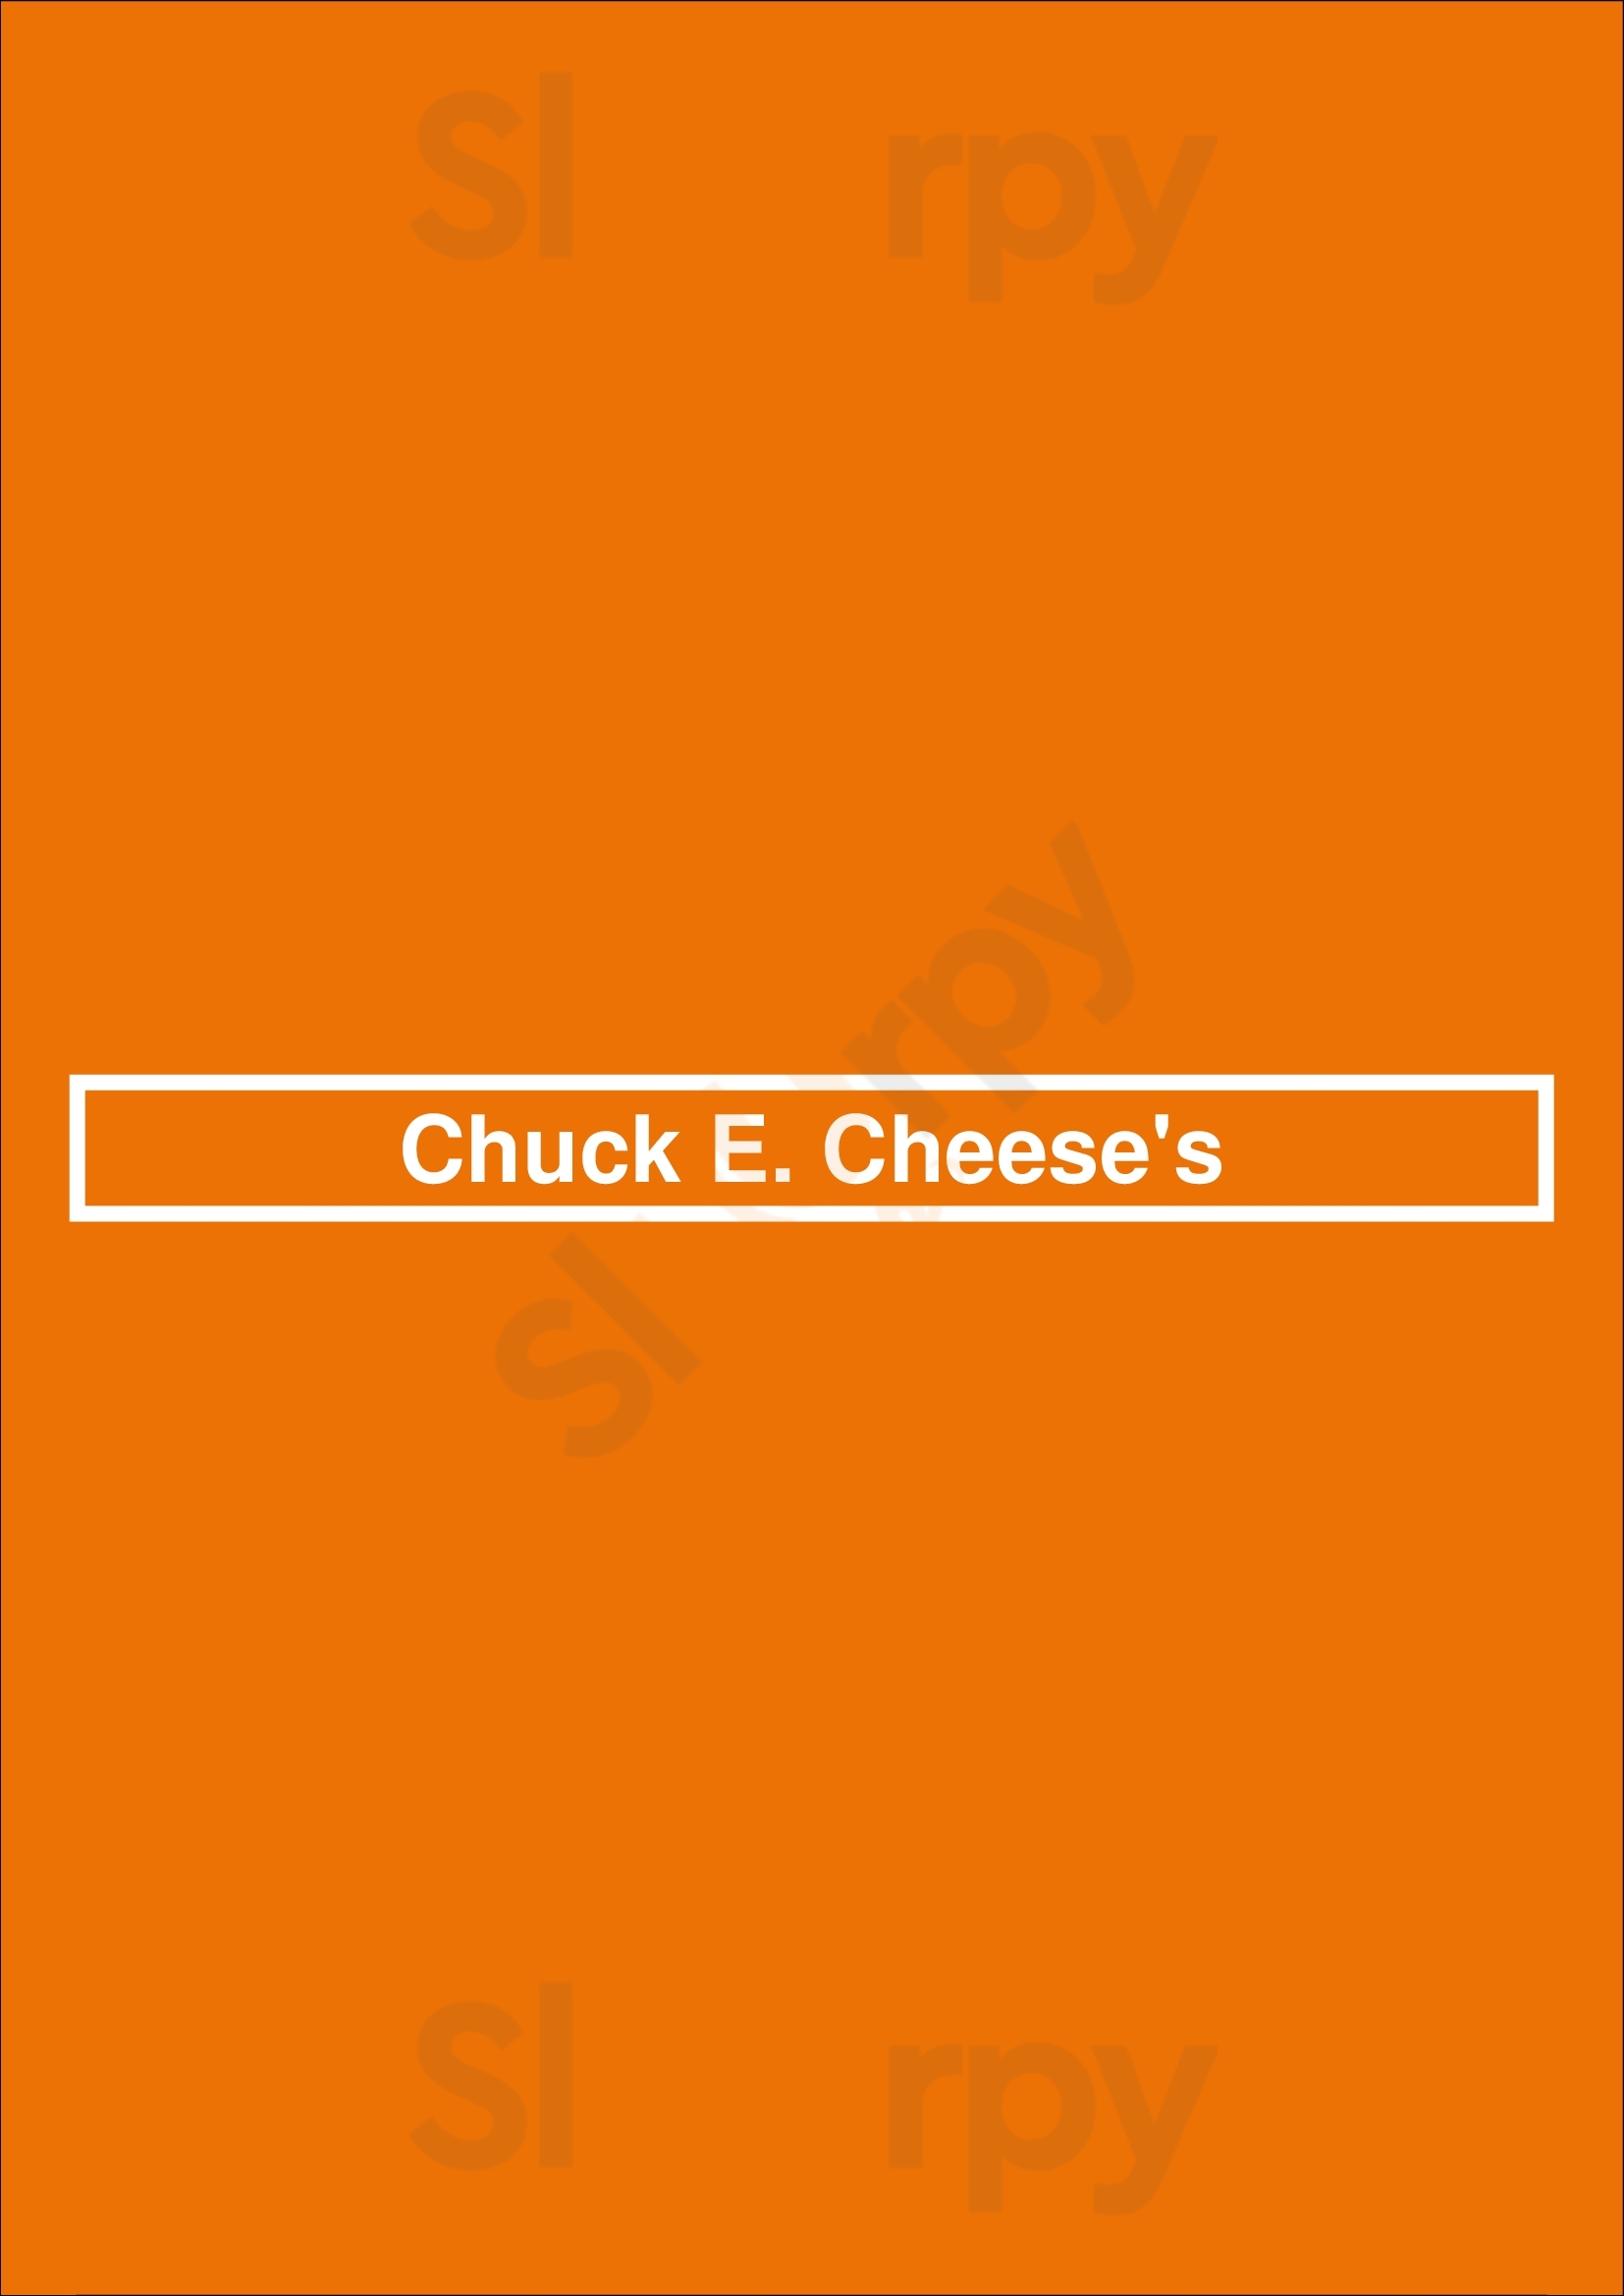 Chuck E. Cheese Houston Menu - 1